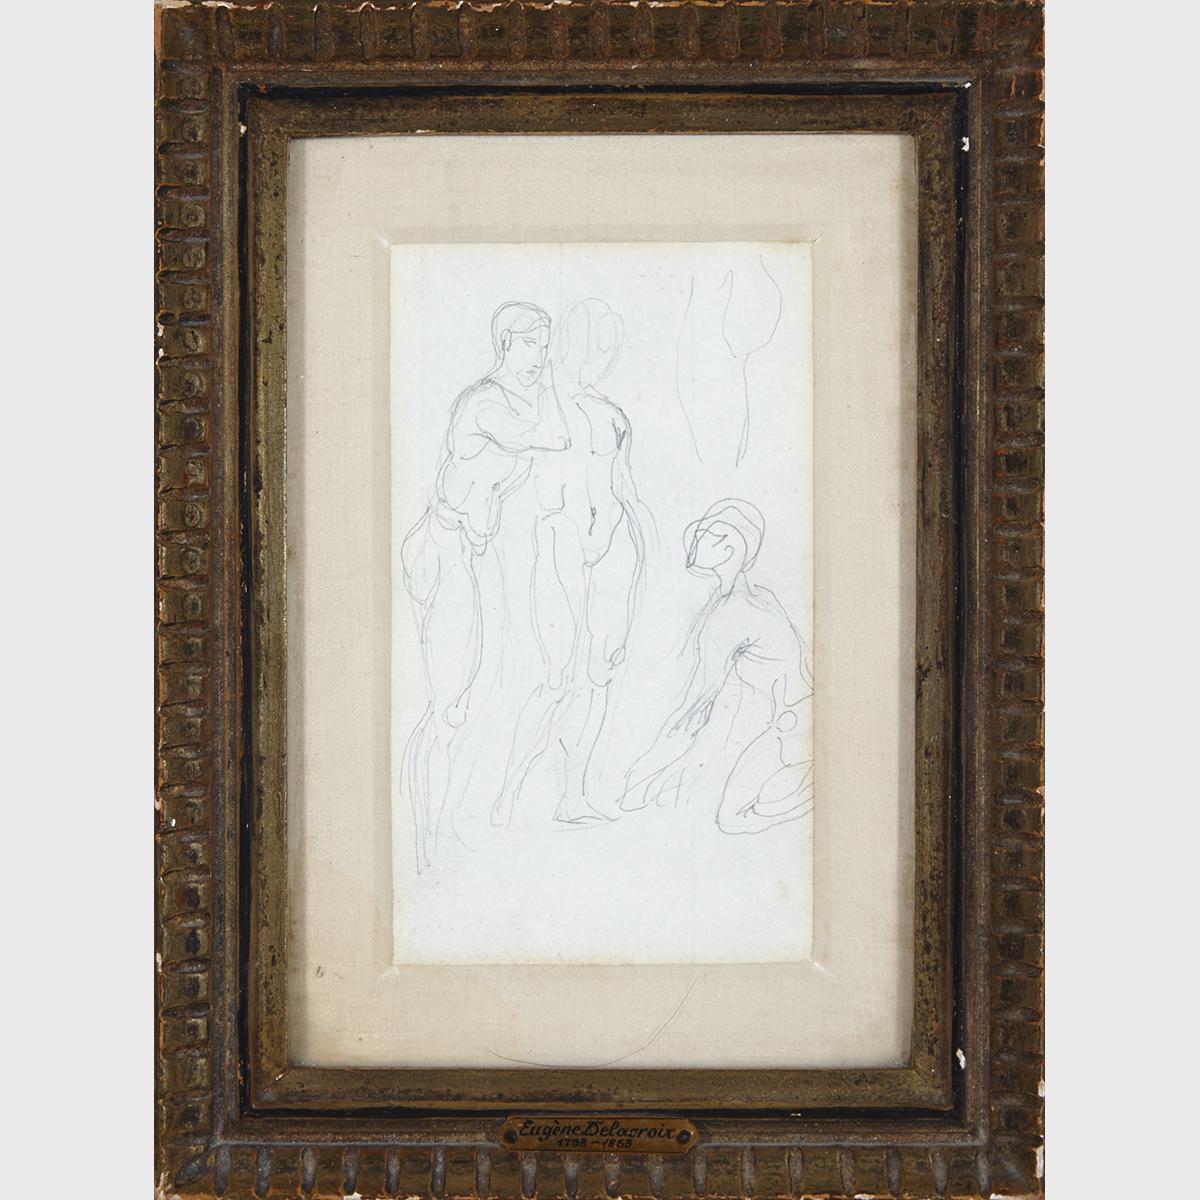 Attributed to Eugene Delacroix (1798-1863)